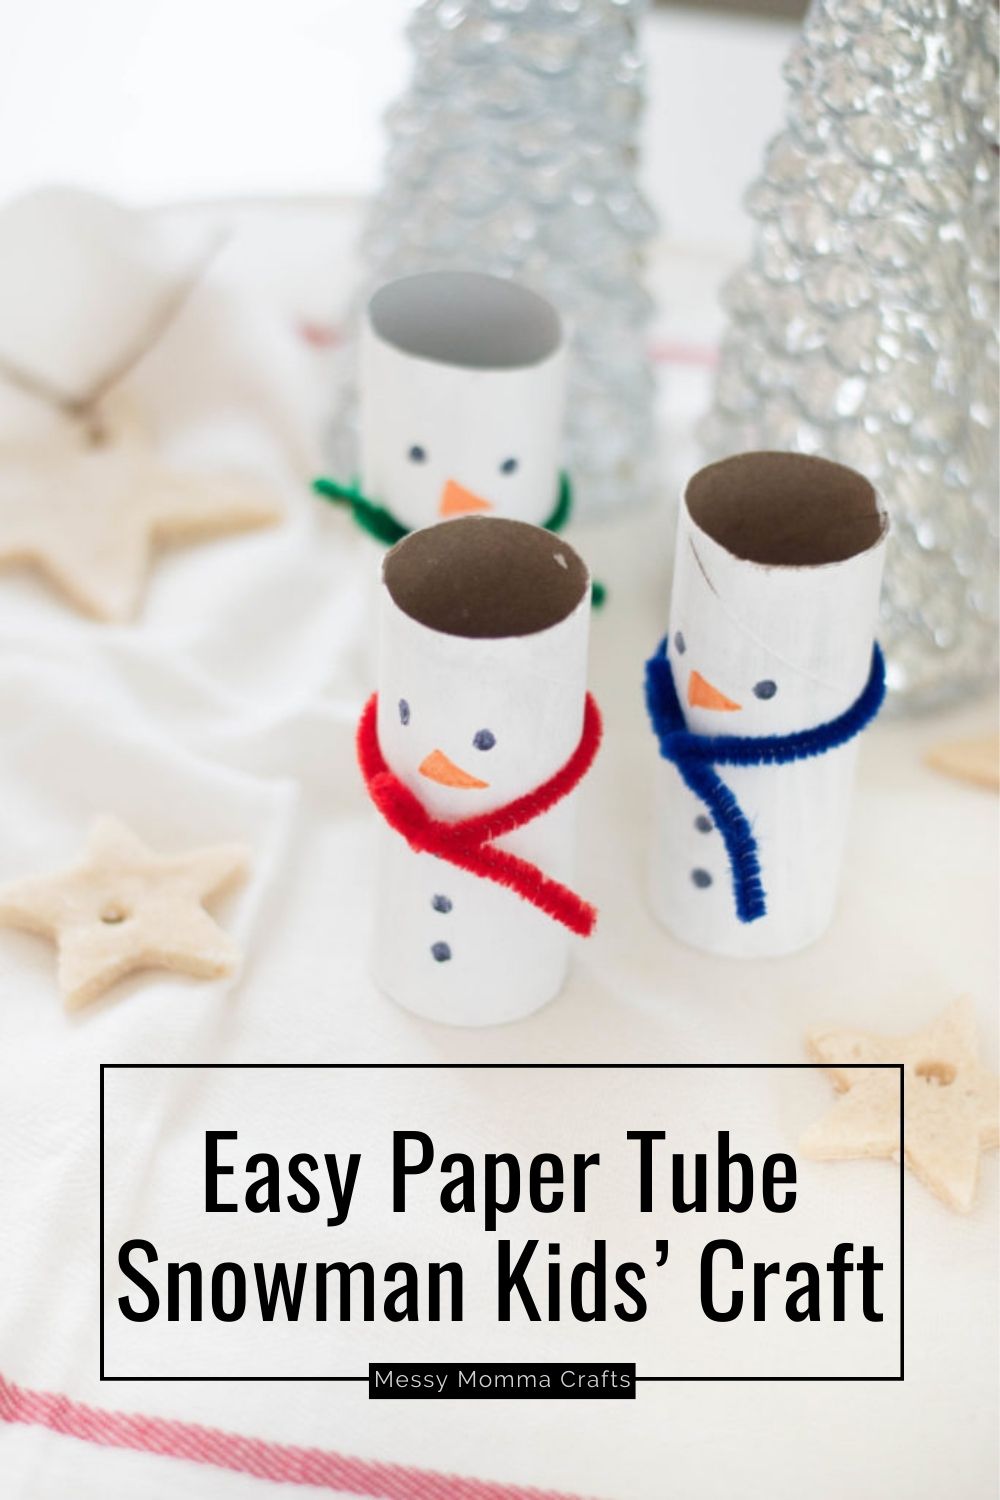 Easy paper tube snowman kids' craft.